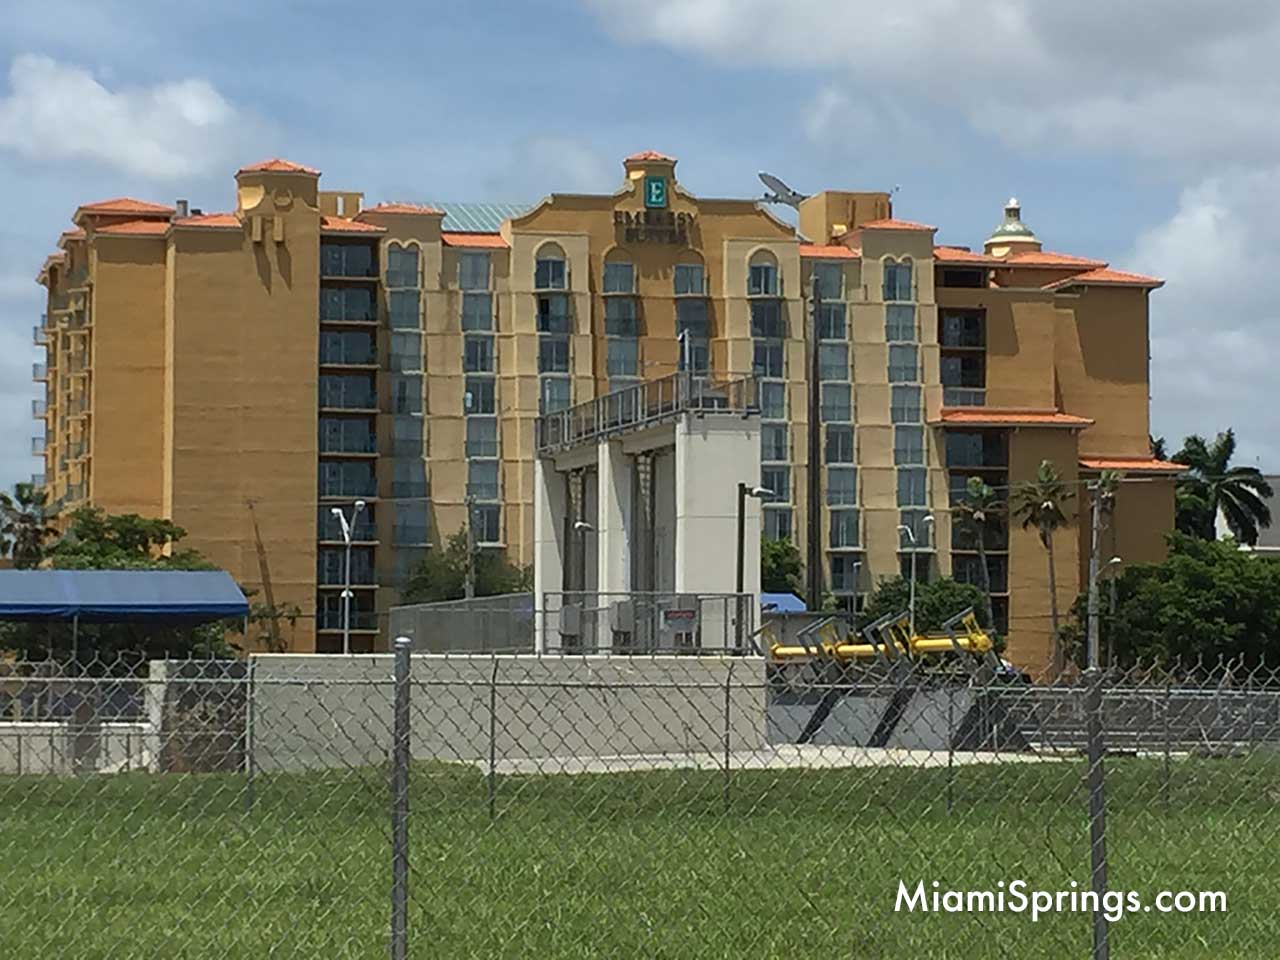 Embassy Suites in Miami Springs